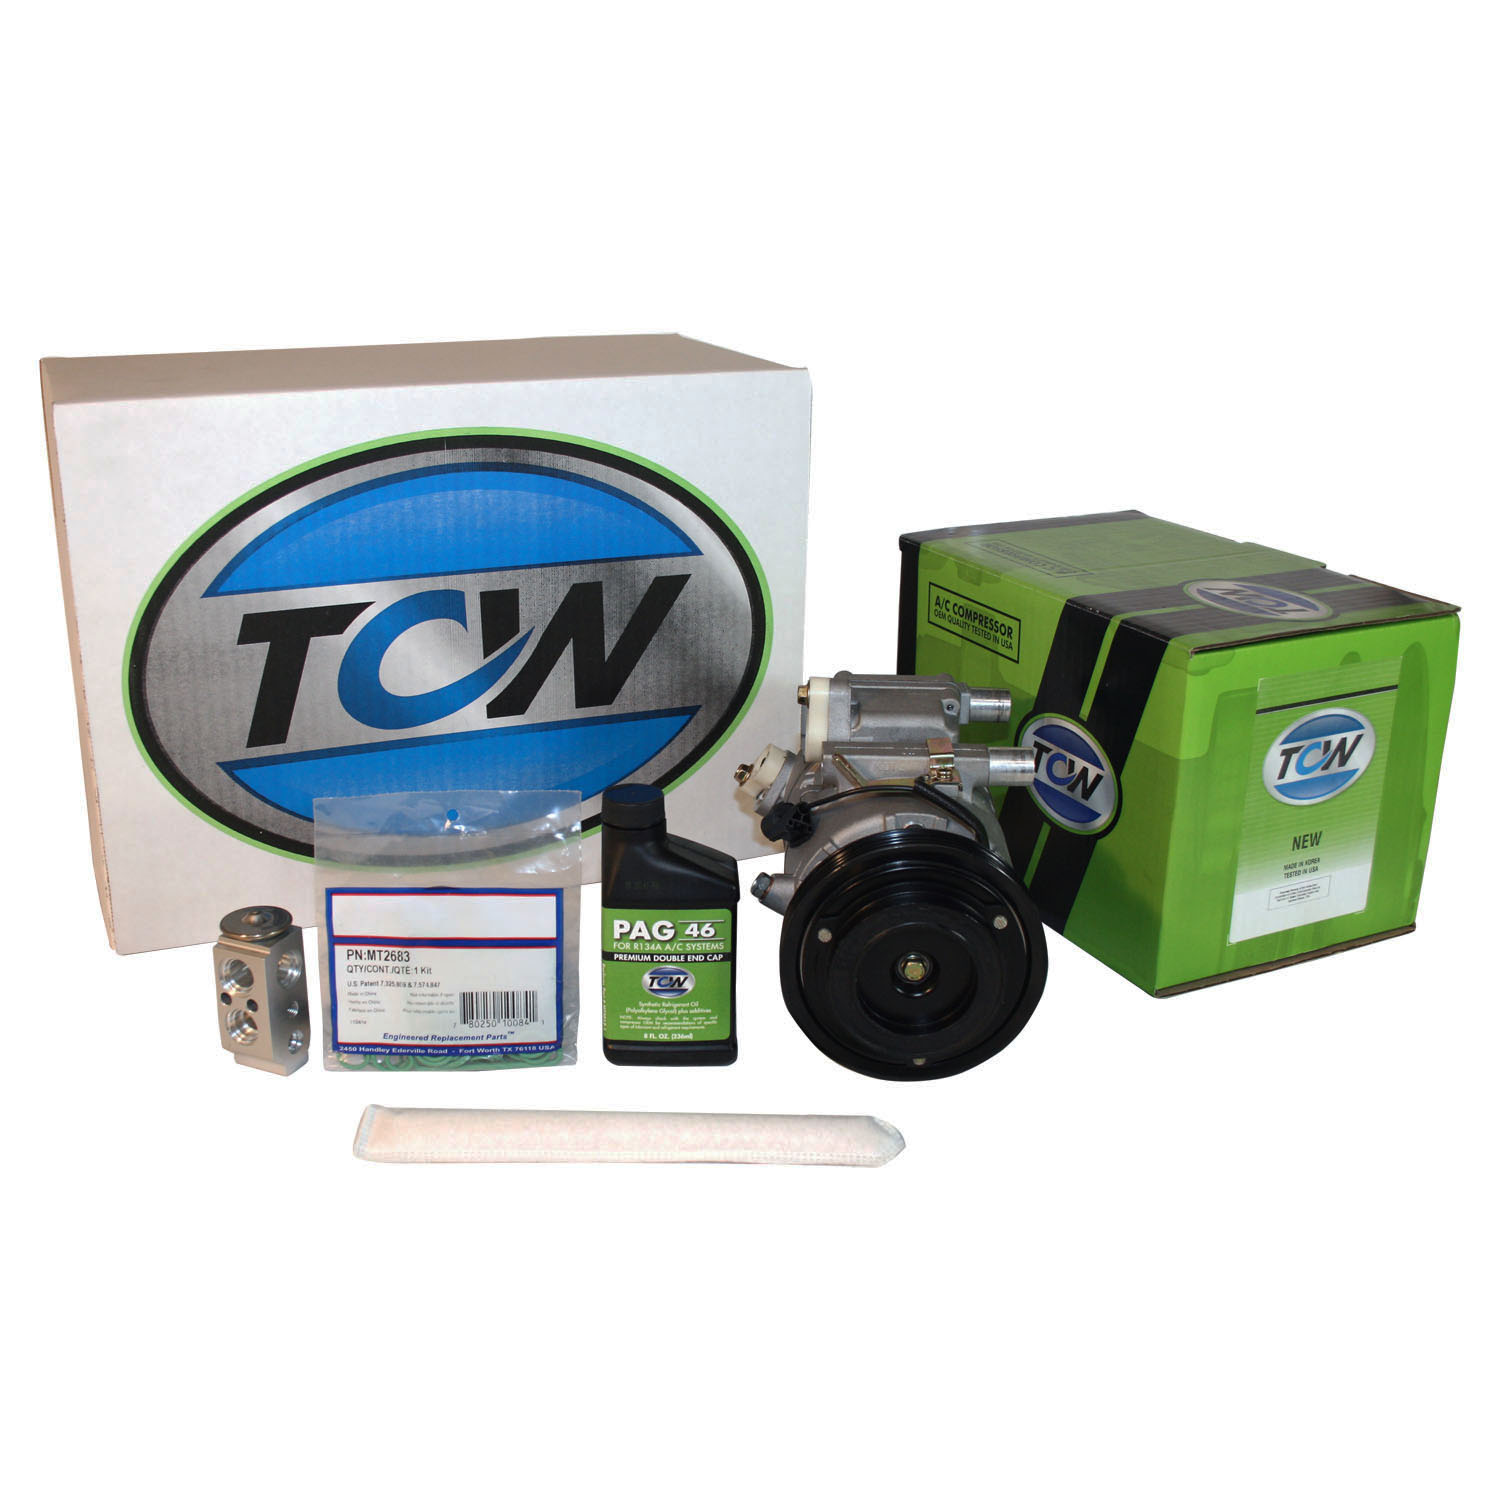 TCW Vehicle A/C Kit K1000372N New Product Image field_60b6a13a6e67c